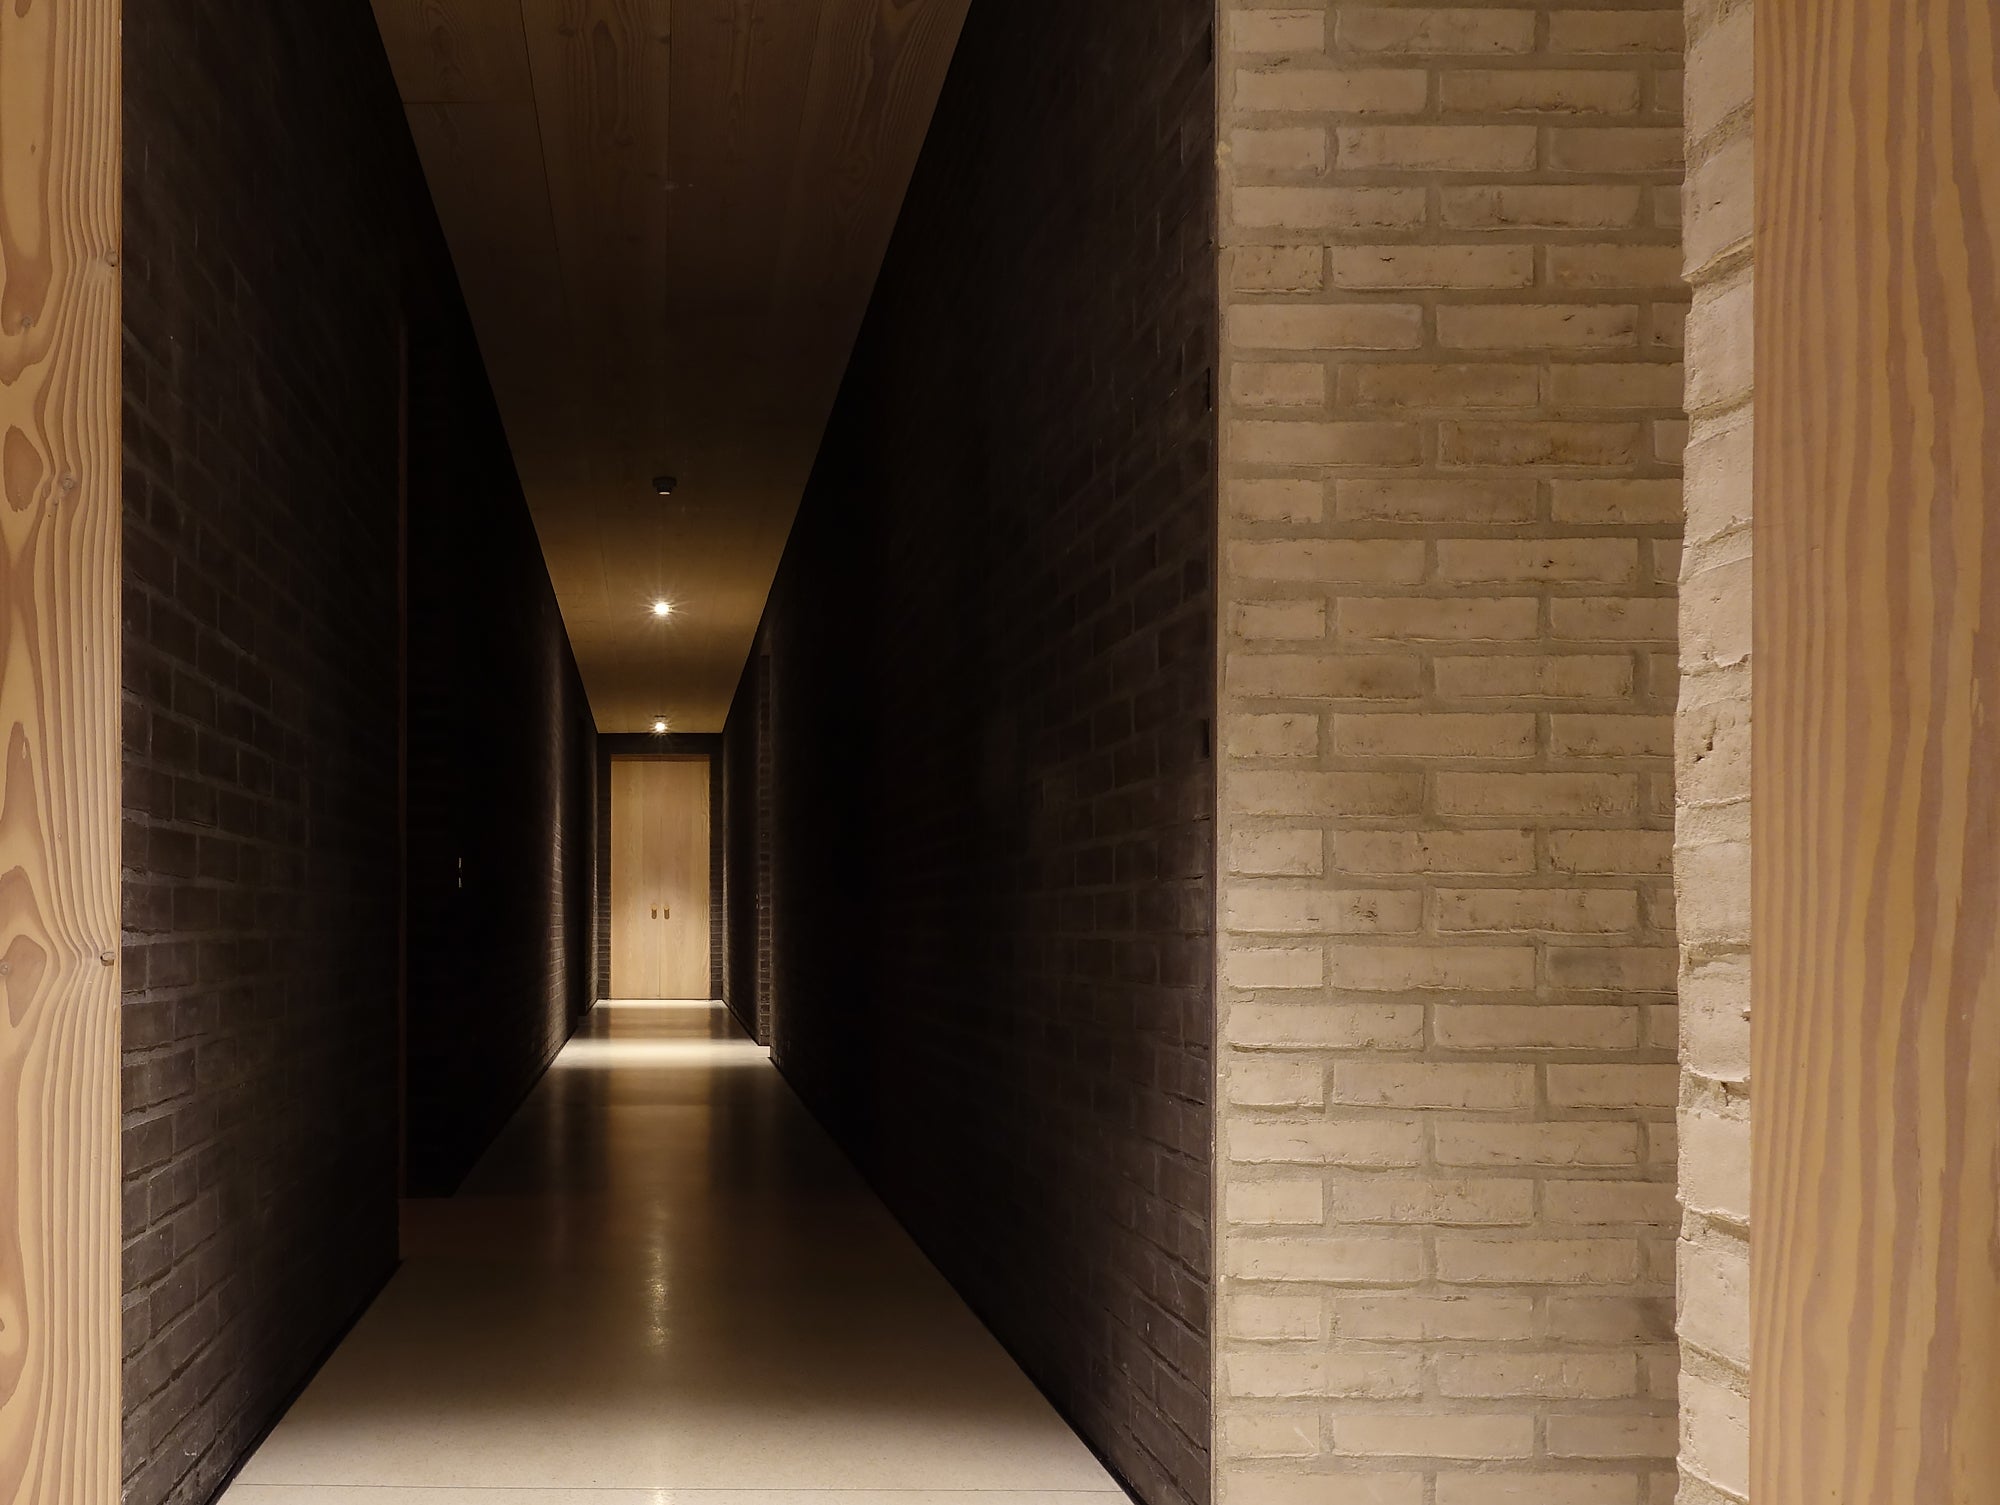 John Pawson's Life House - Corridors 